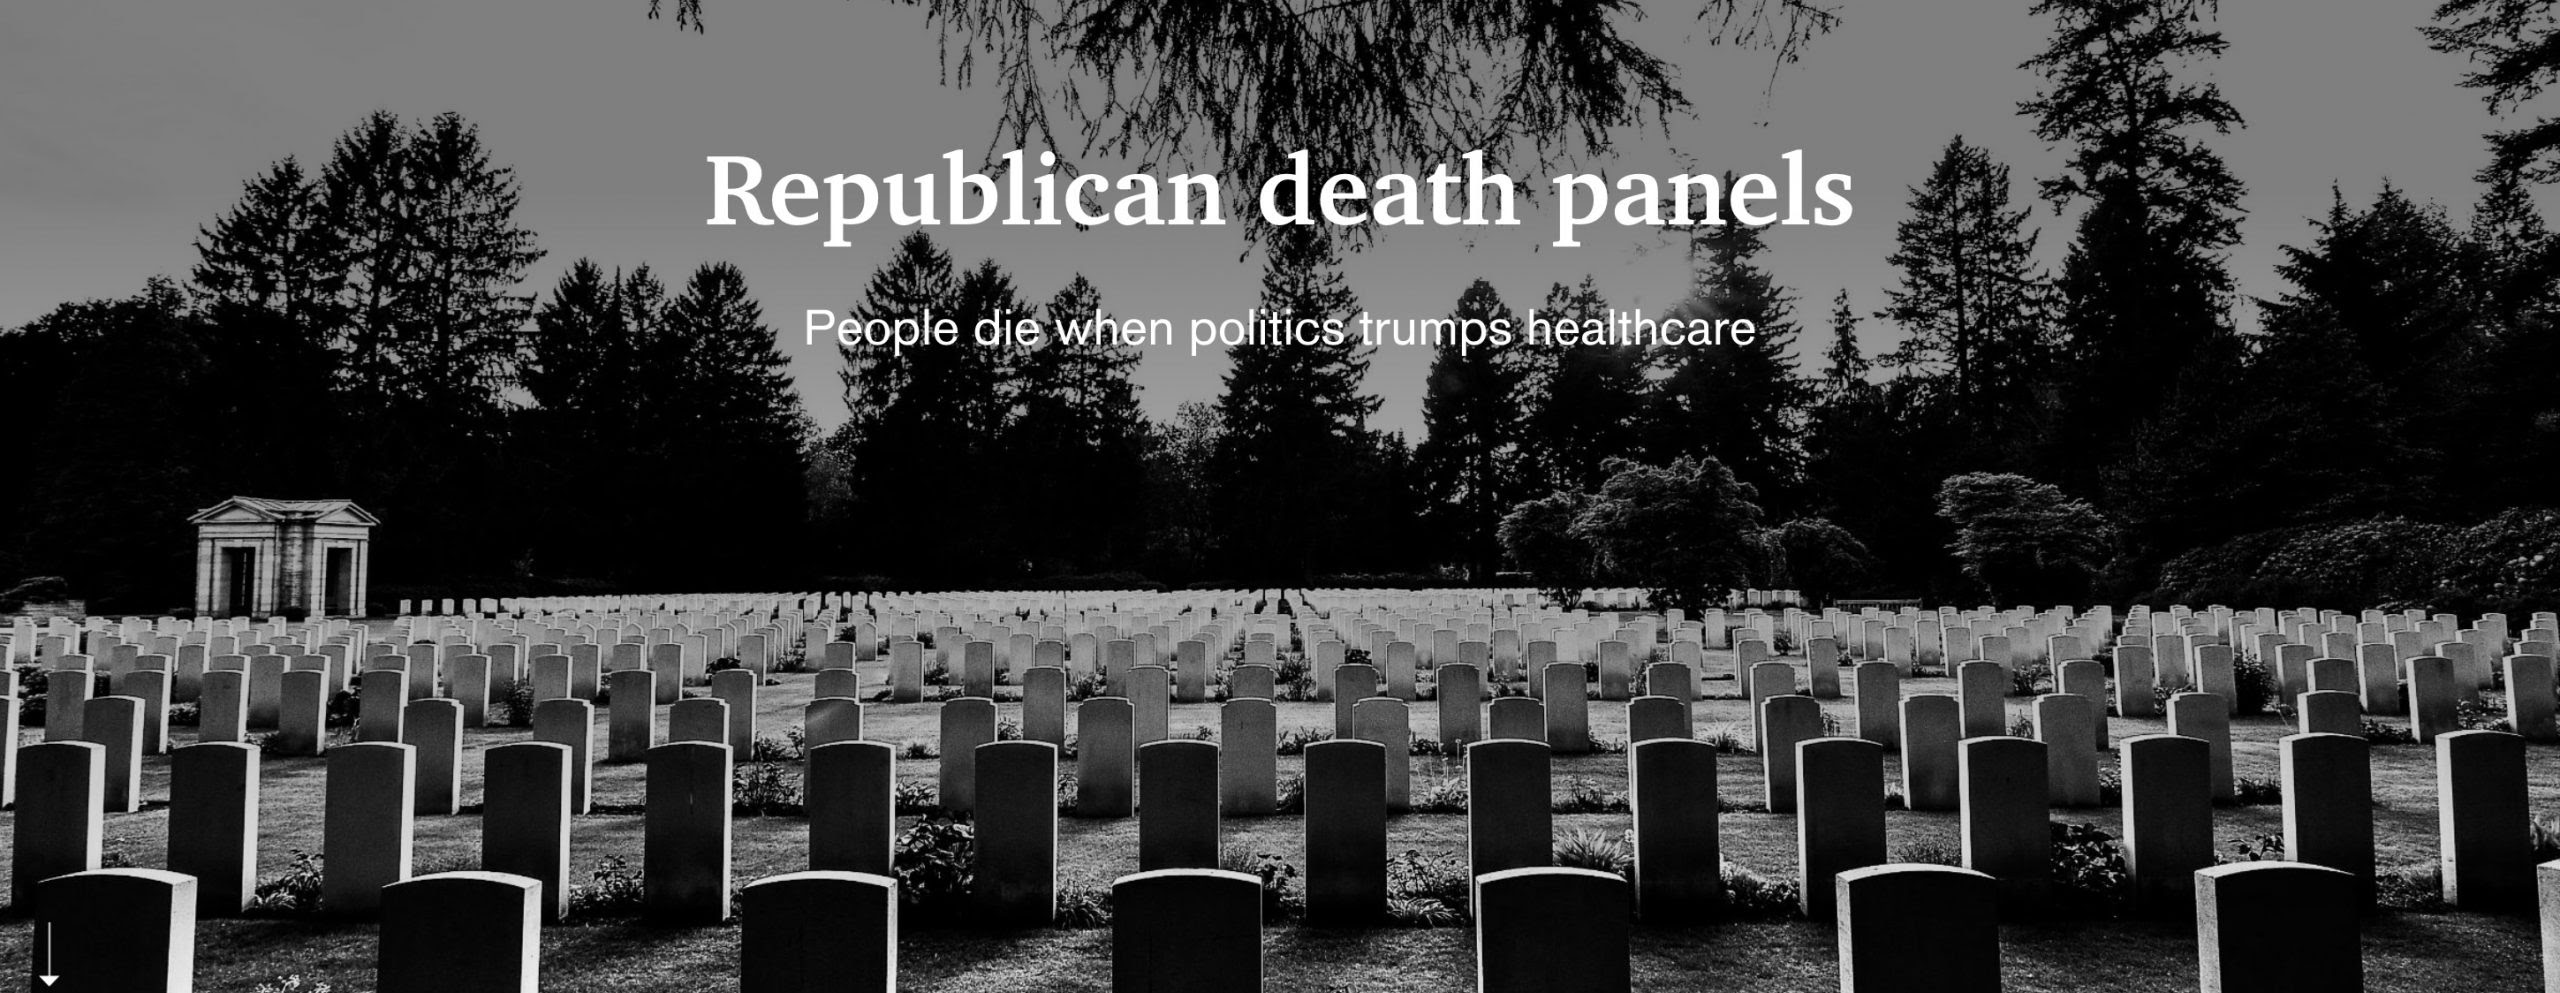 Republican death panels put tax cuts above healthcare